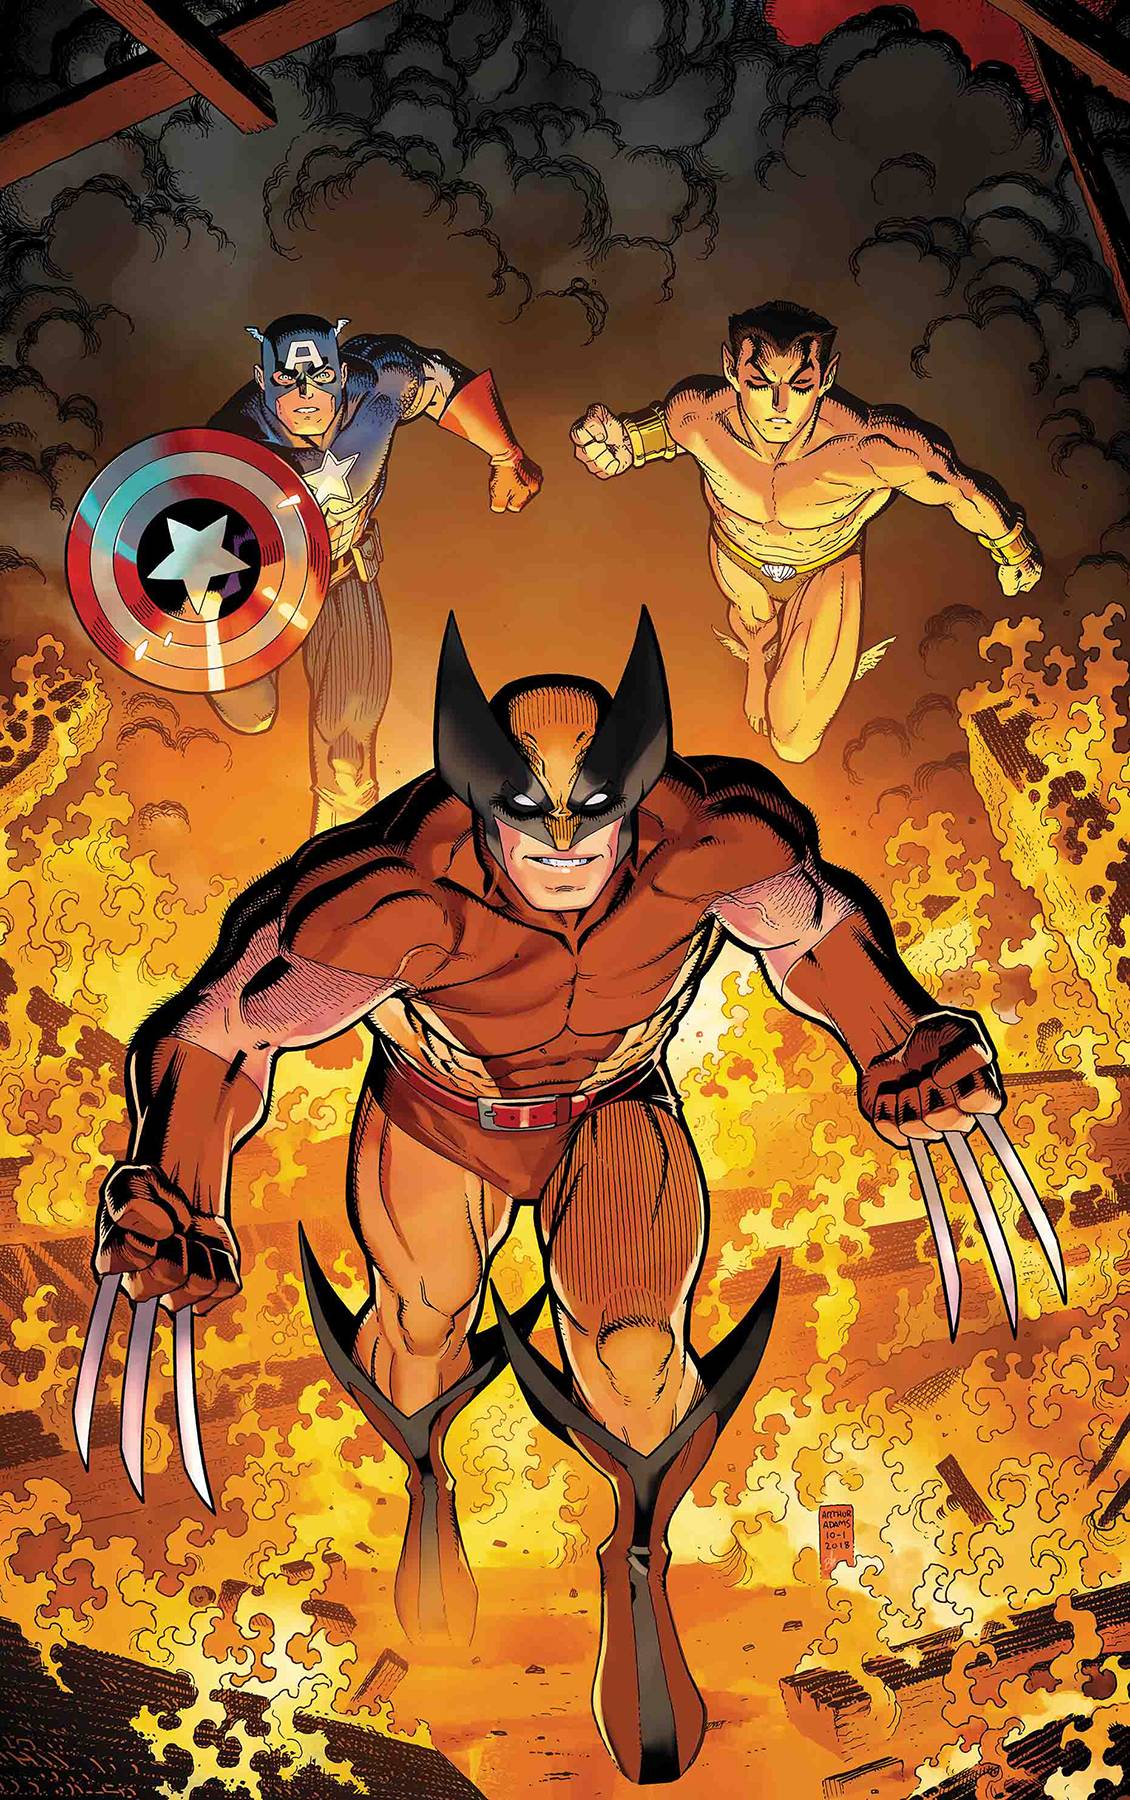 Marvel Comics Presents #1 by Arthur Adams Poster